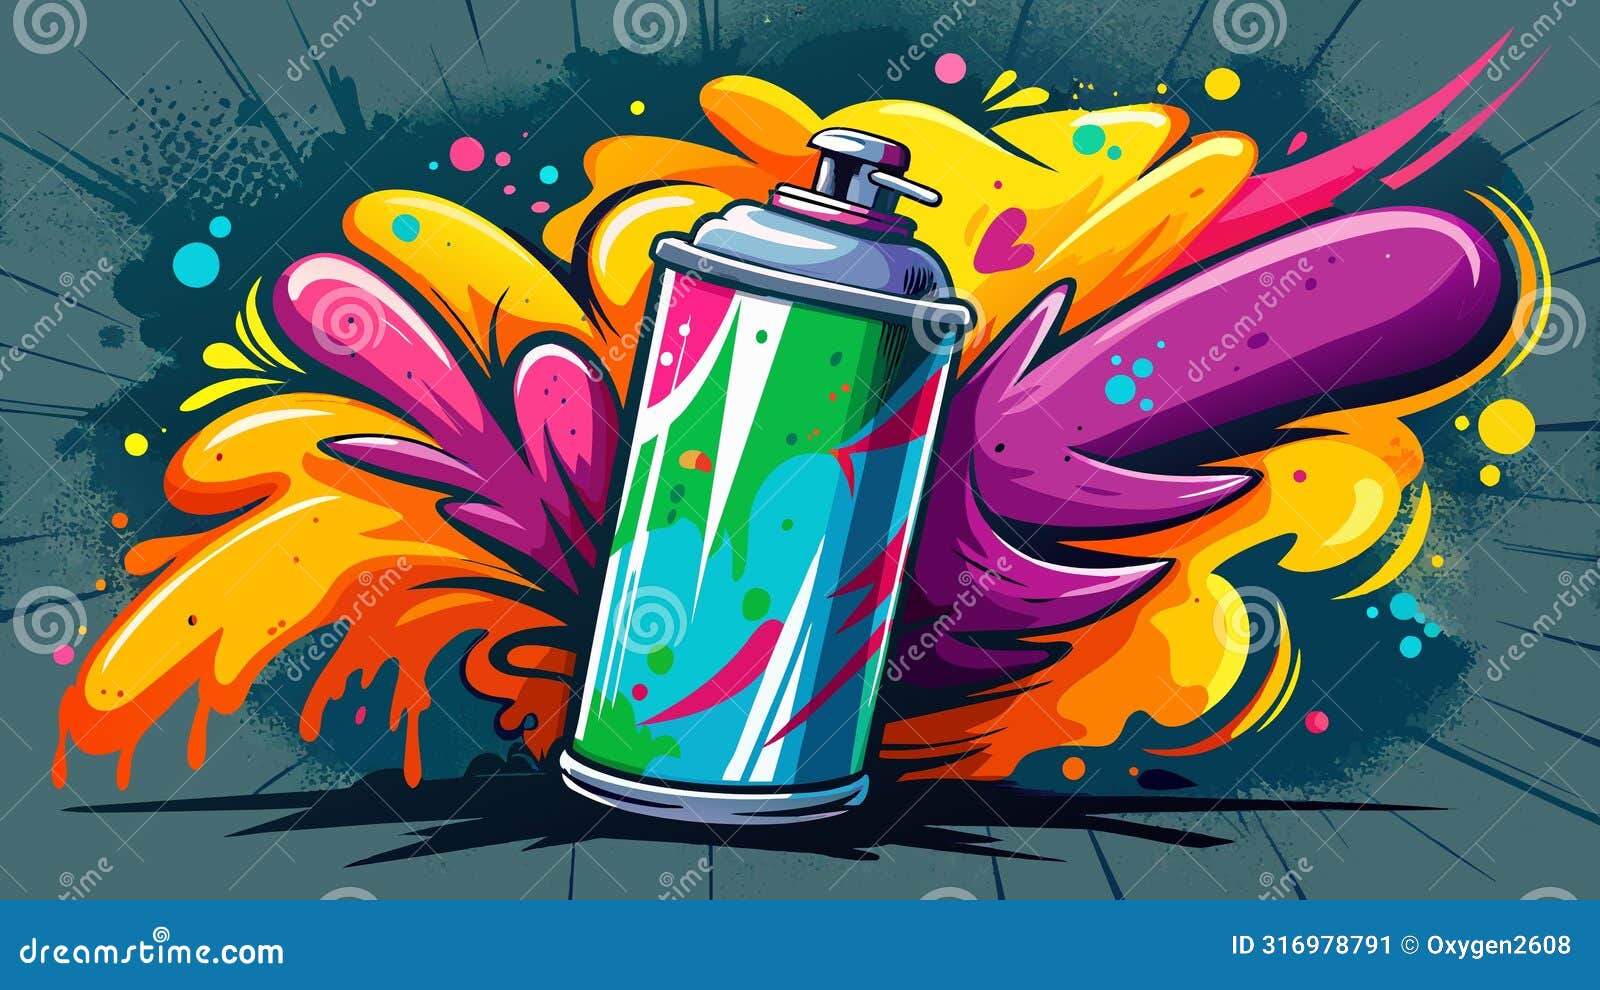 vibrant graffiti spray paint can explosion on urban wall